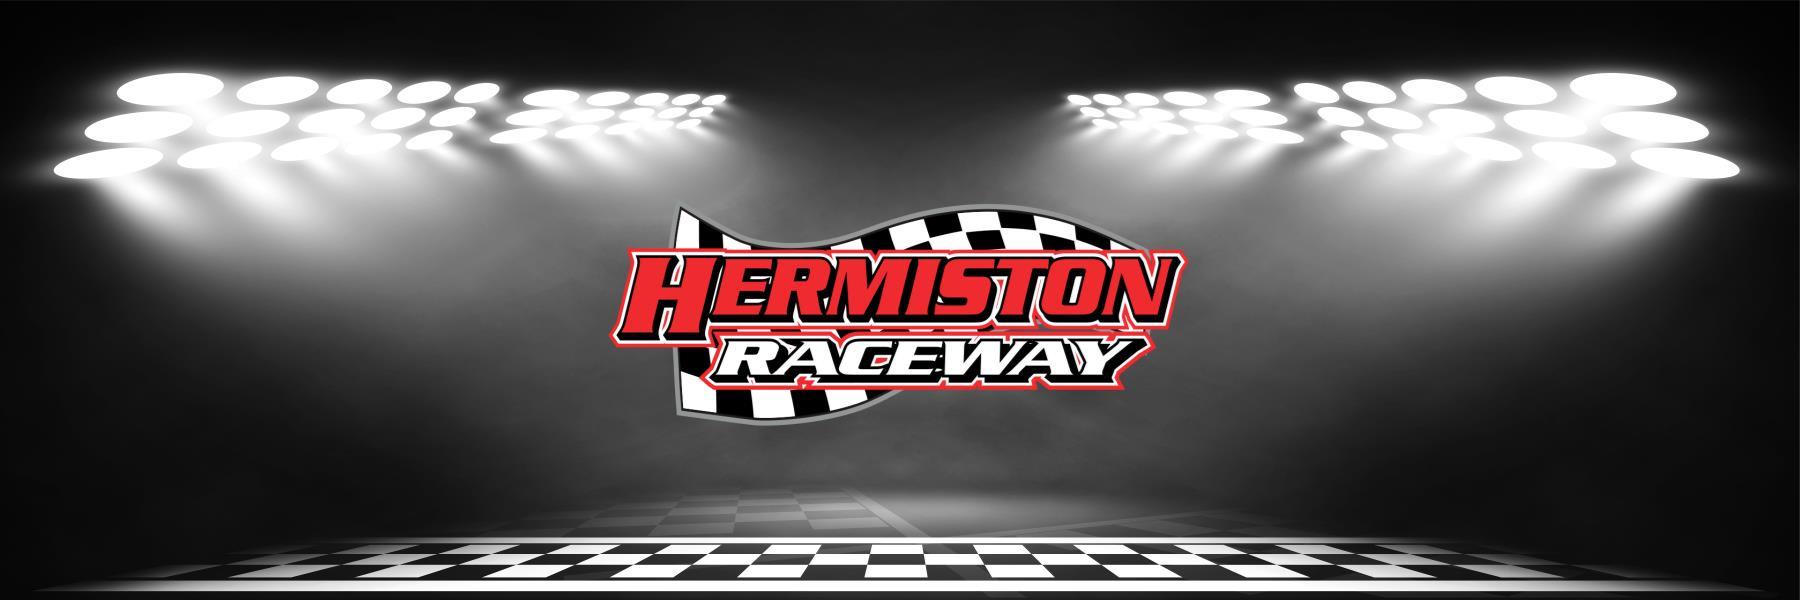 9/3/2021 - Hermiston Raceway